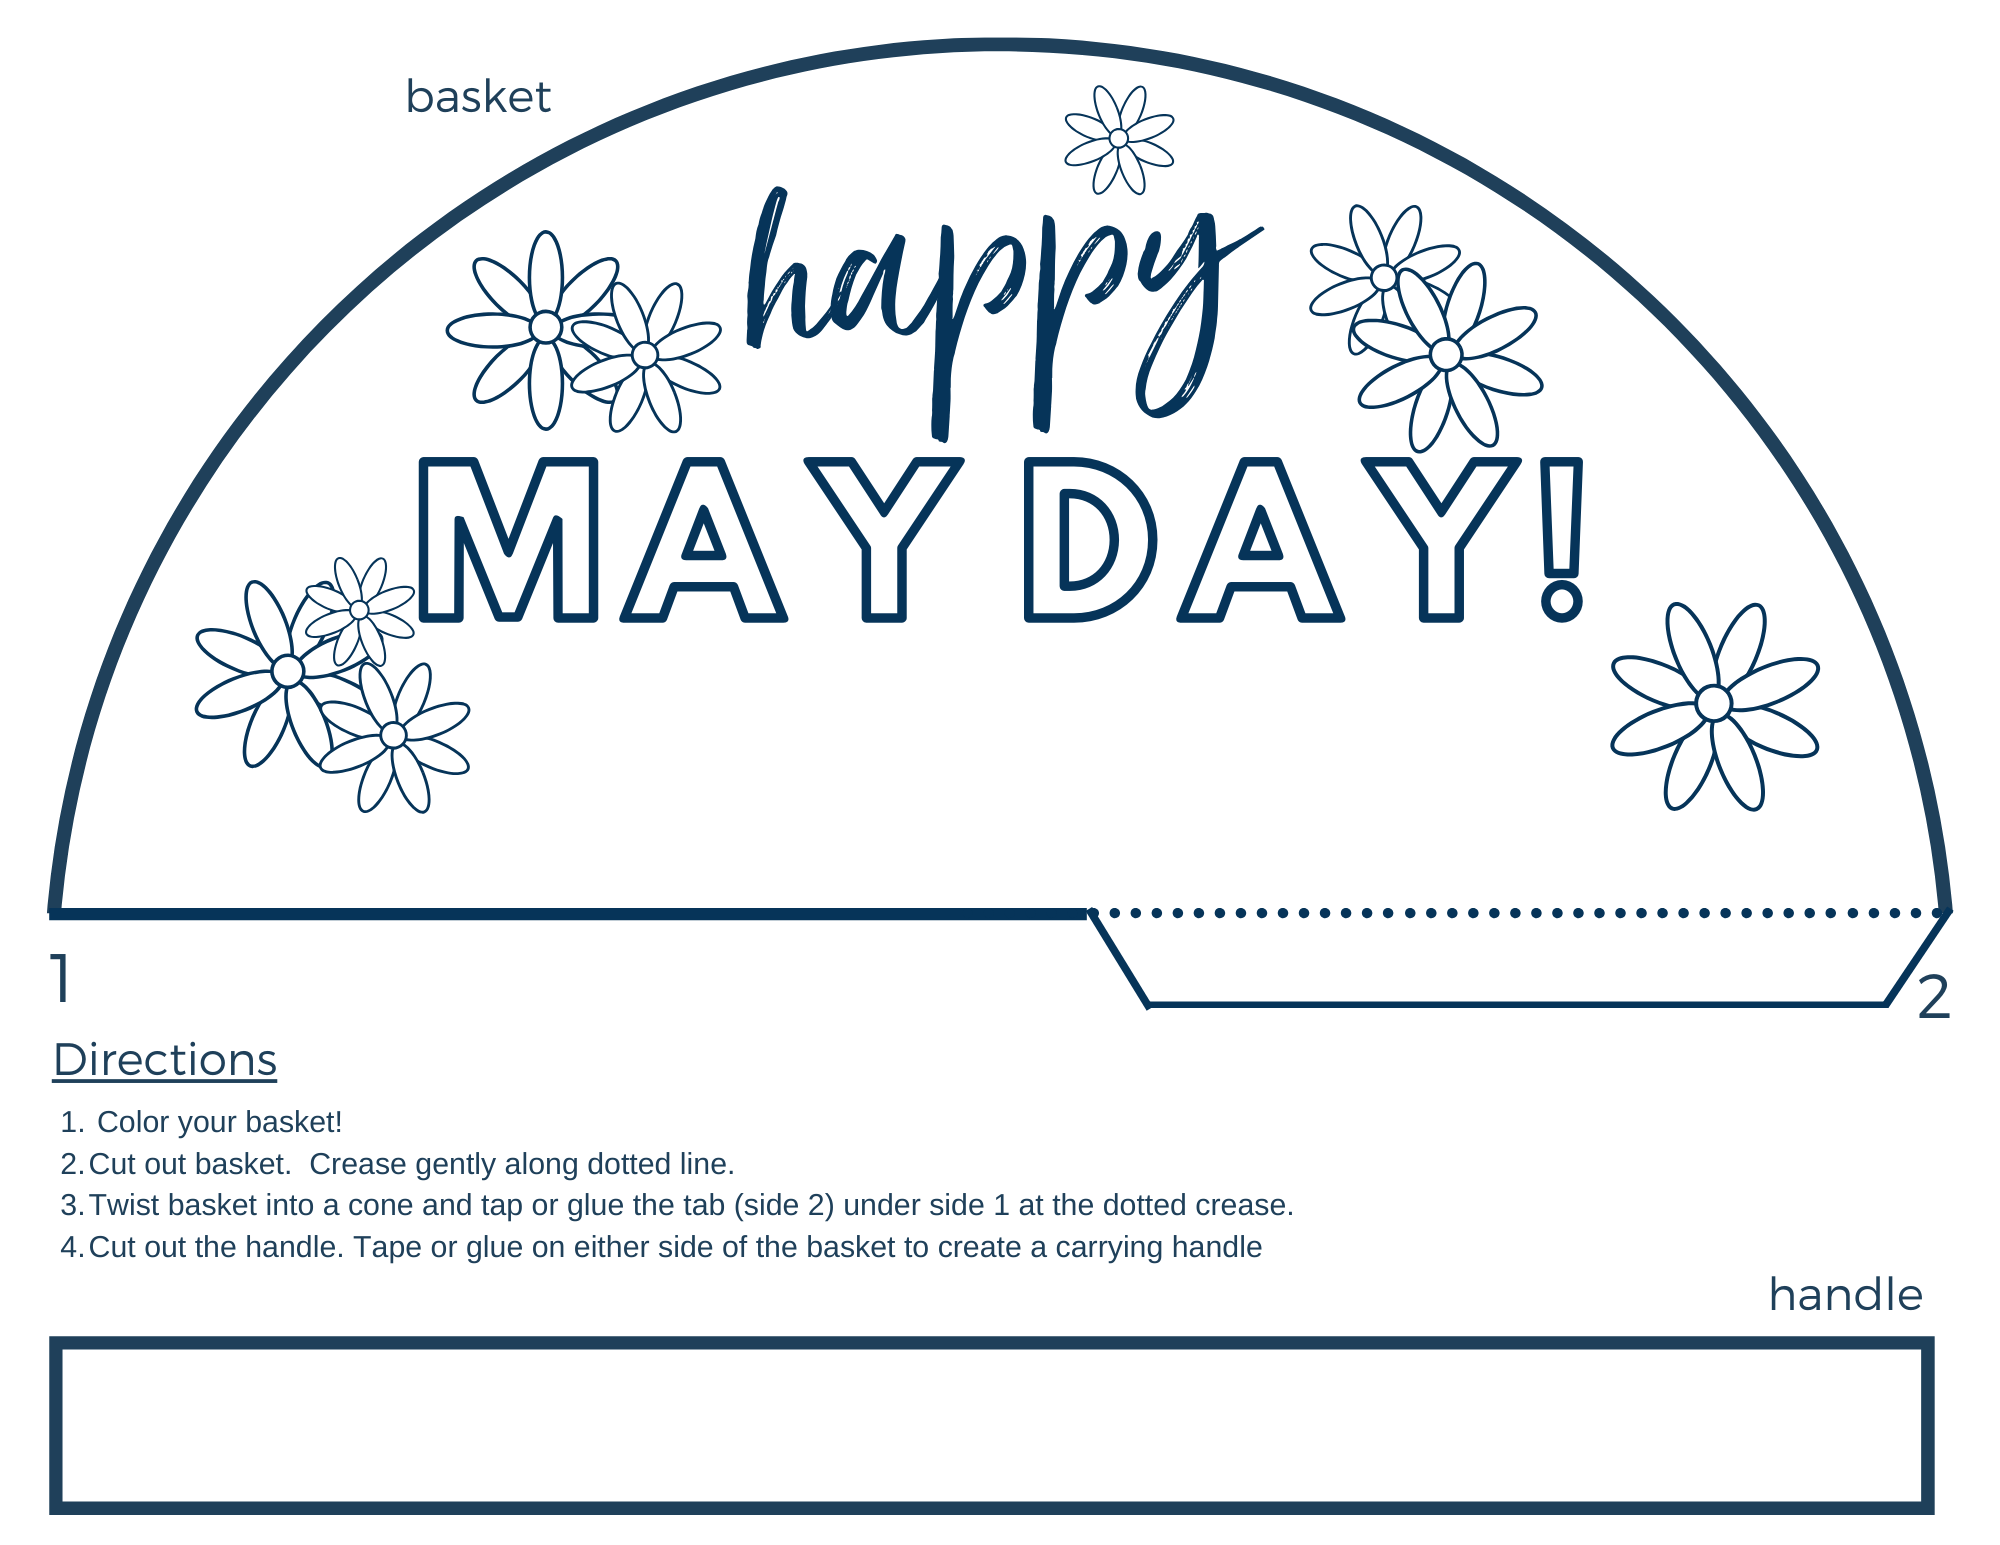 20 May Day Basket Ideas + FREE Basket Printable May 1st